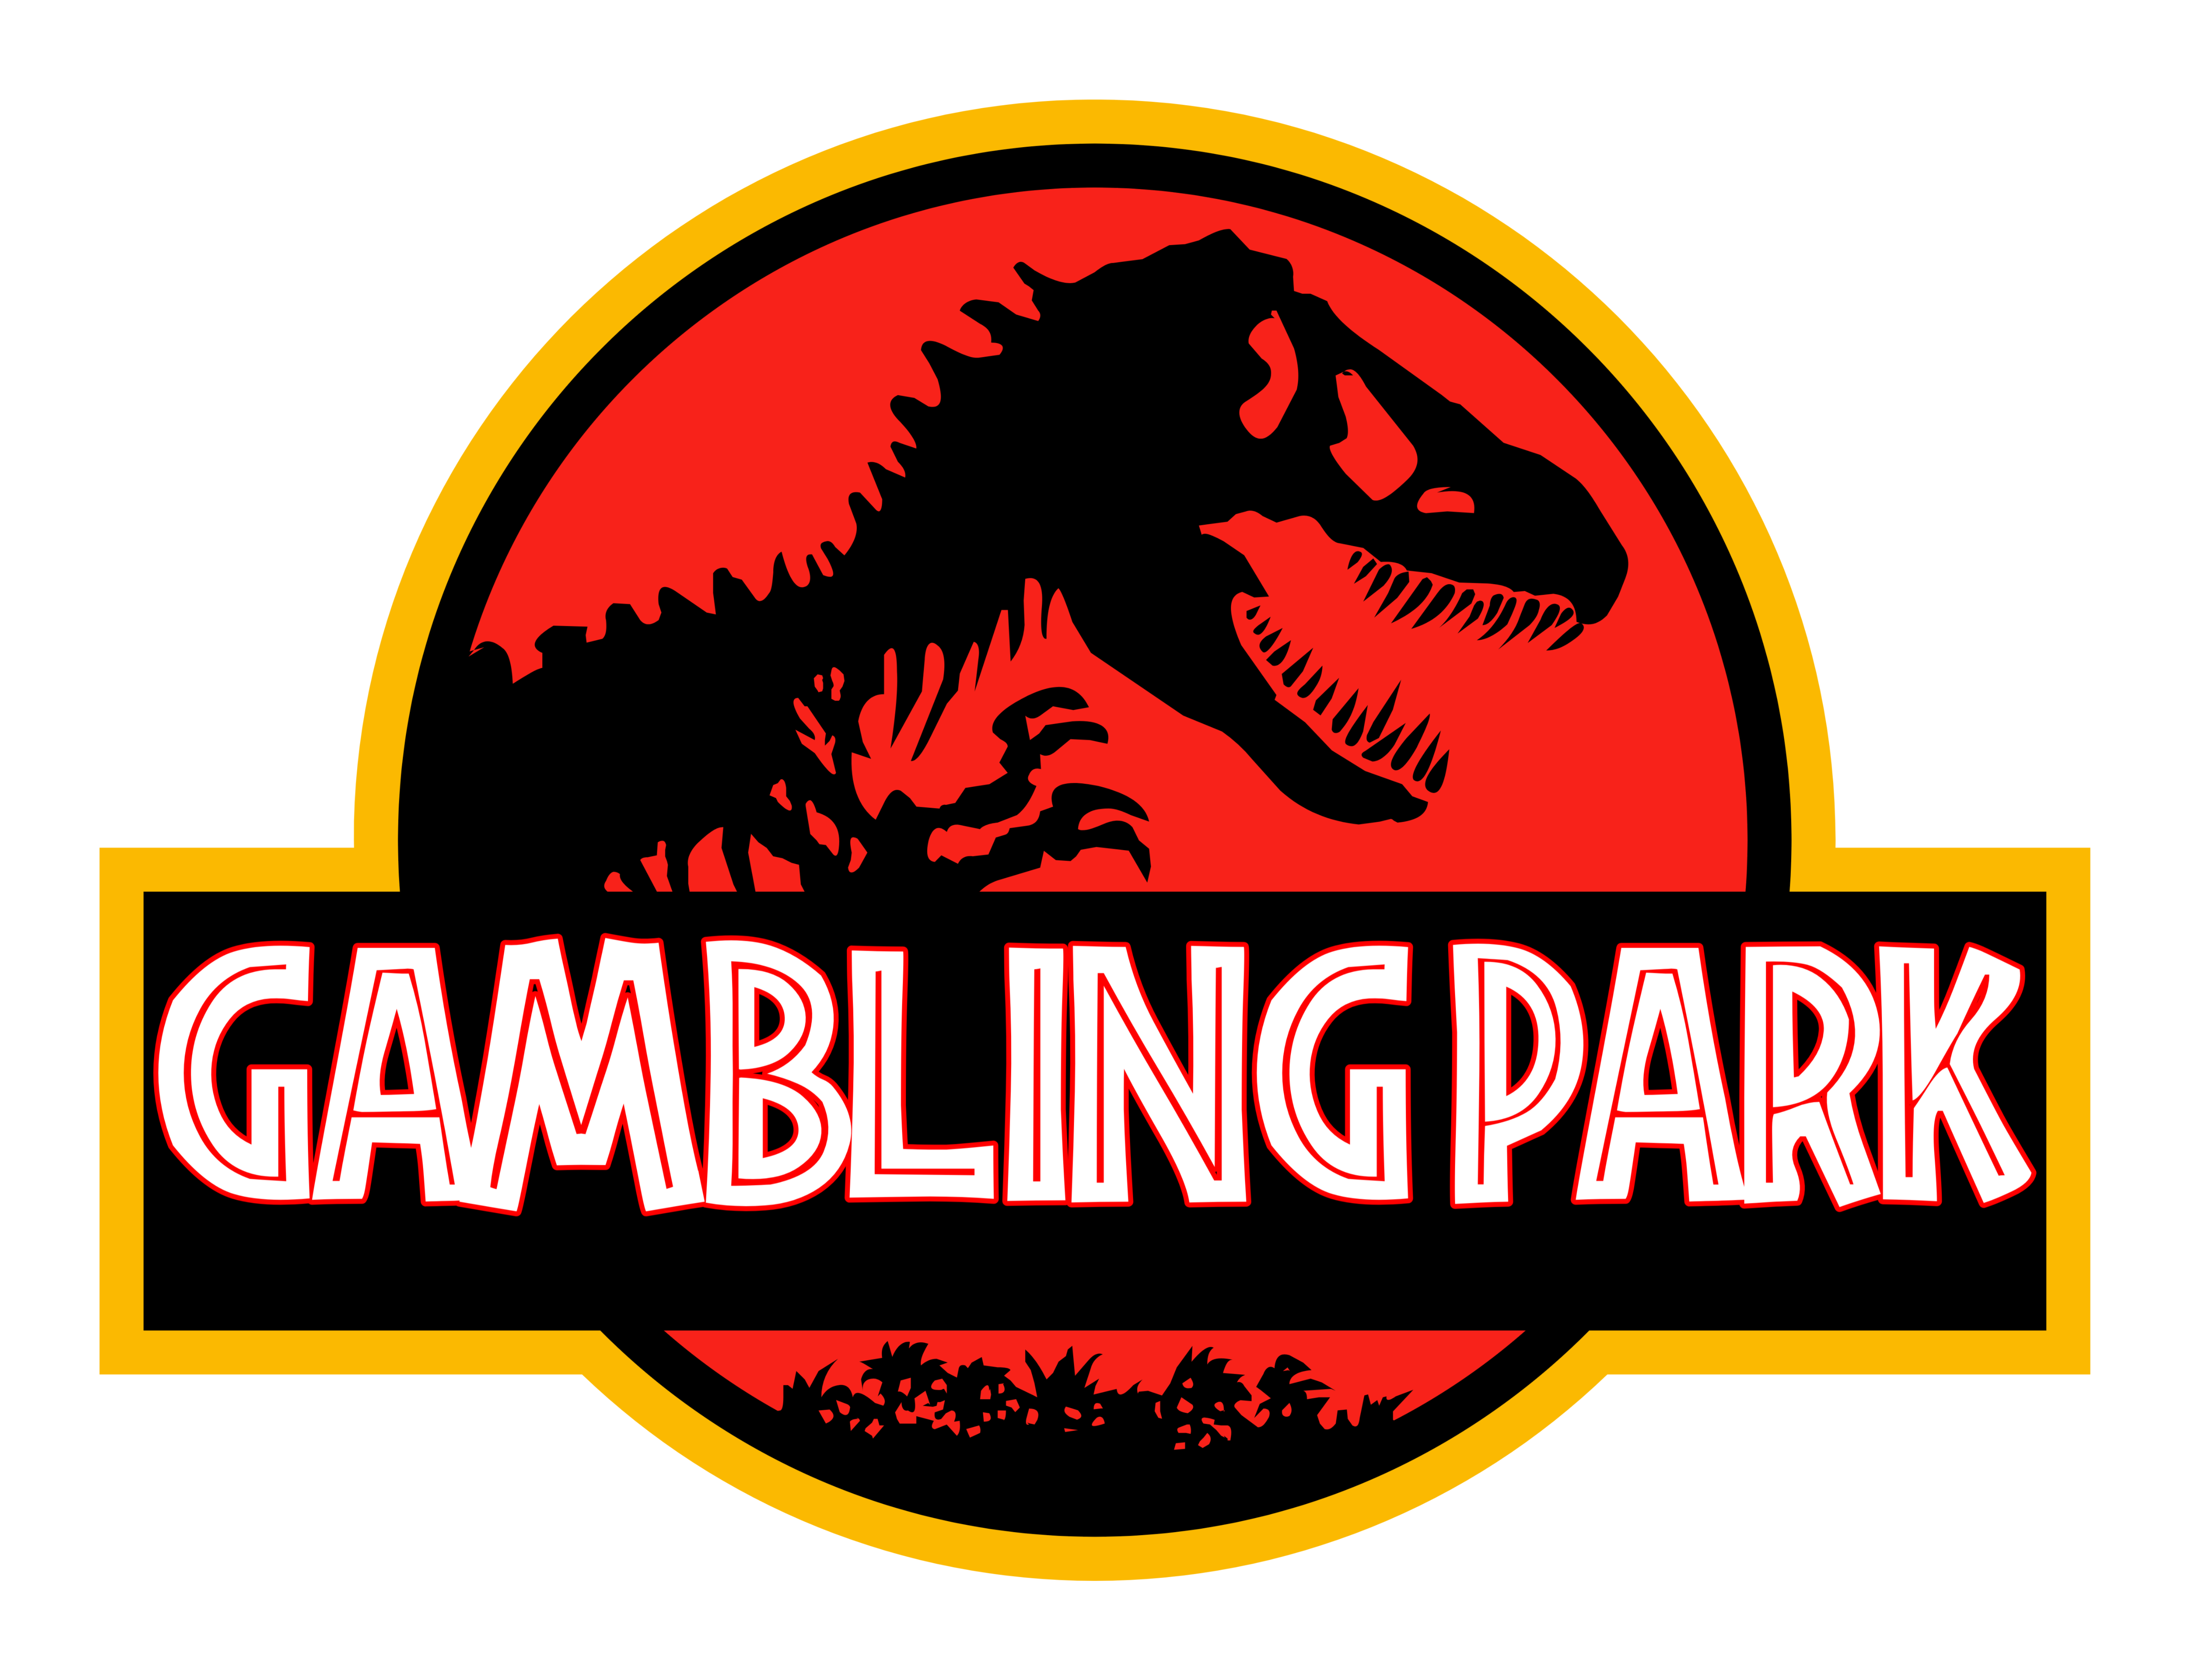 GAMBLING PARK